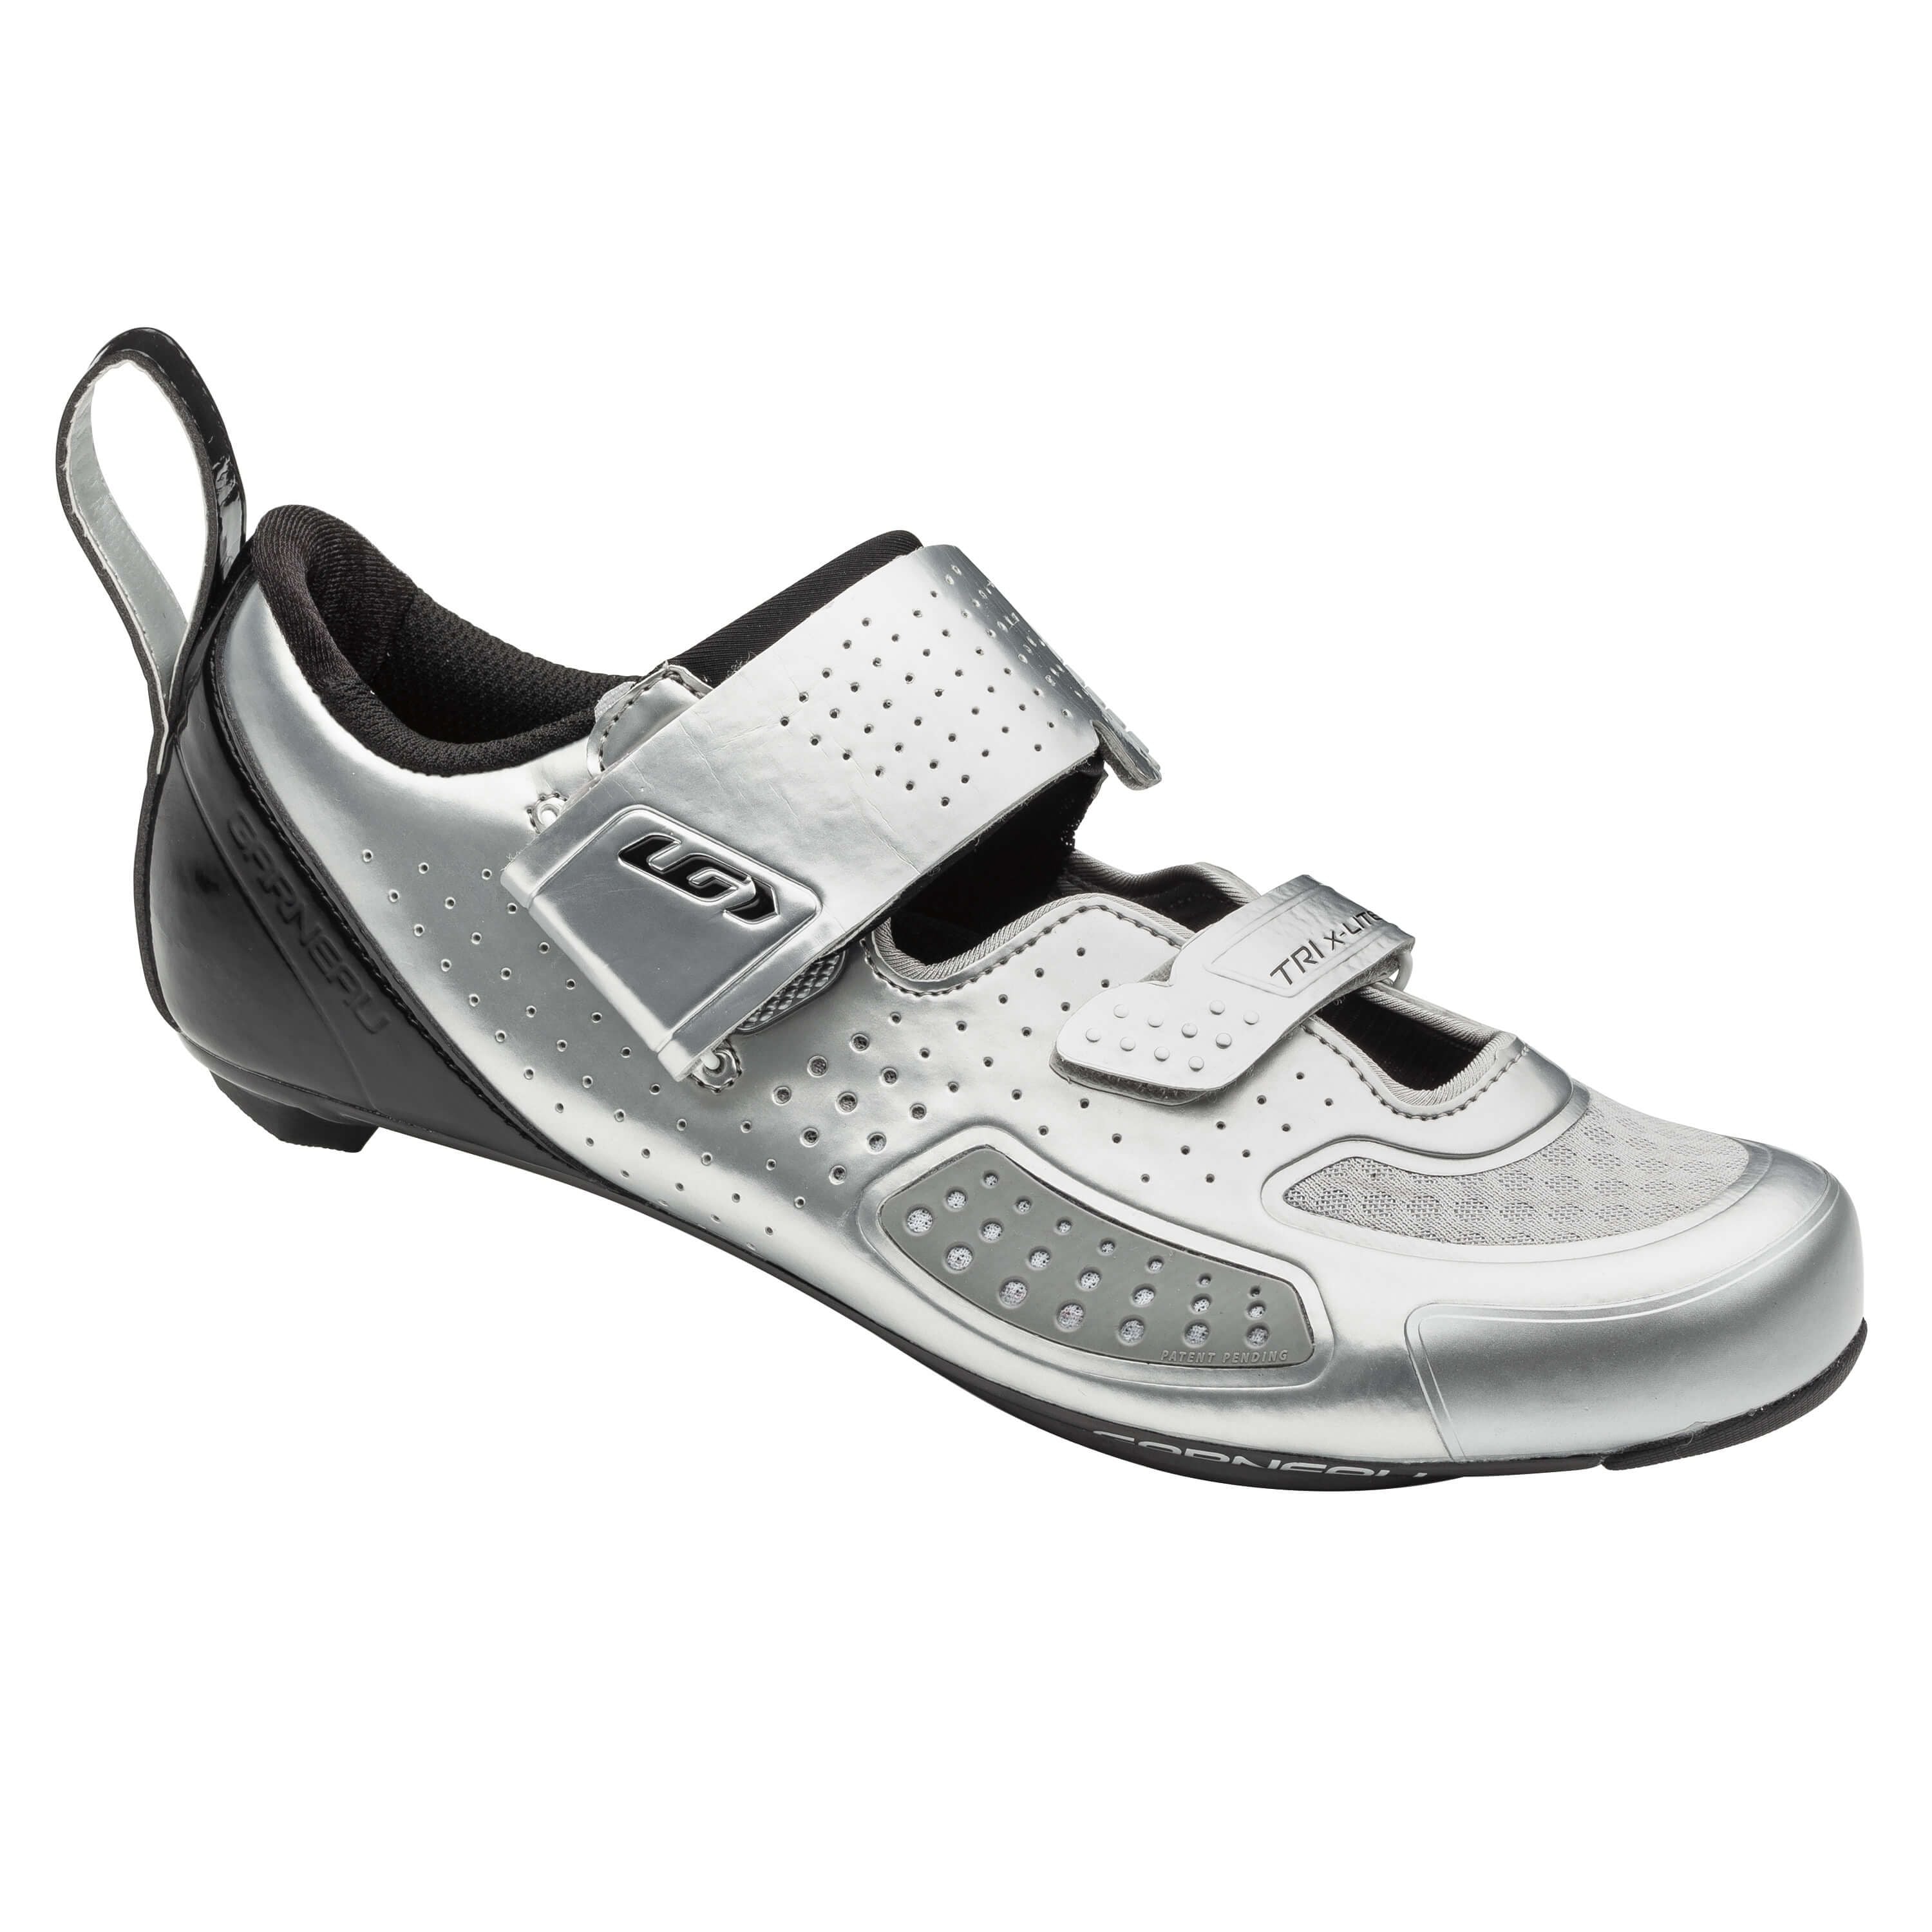 Garneau Tri X-Lite III Shoes - Drizzle Men's Size 50